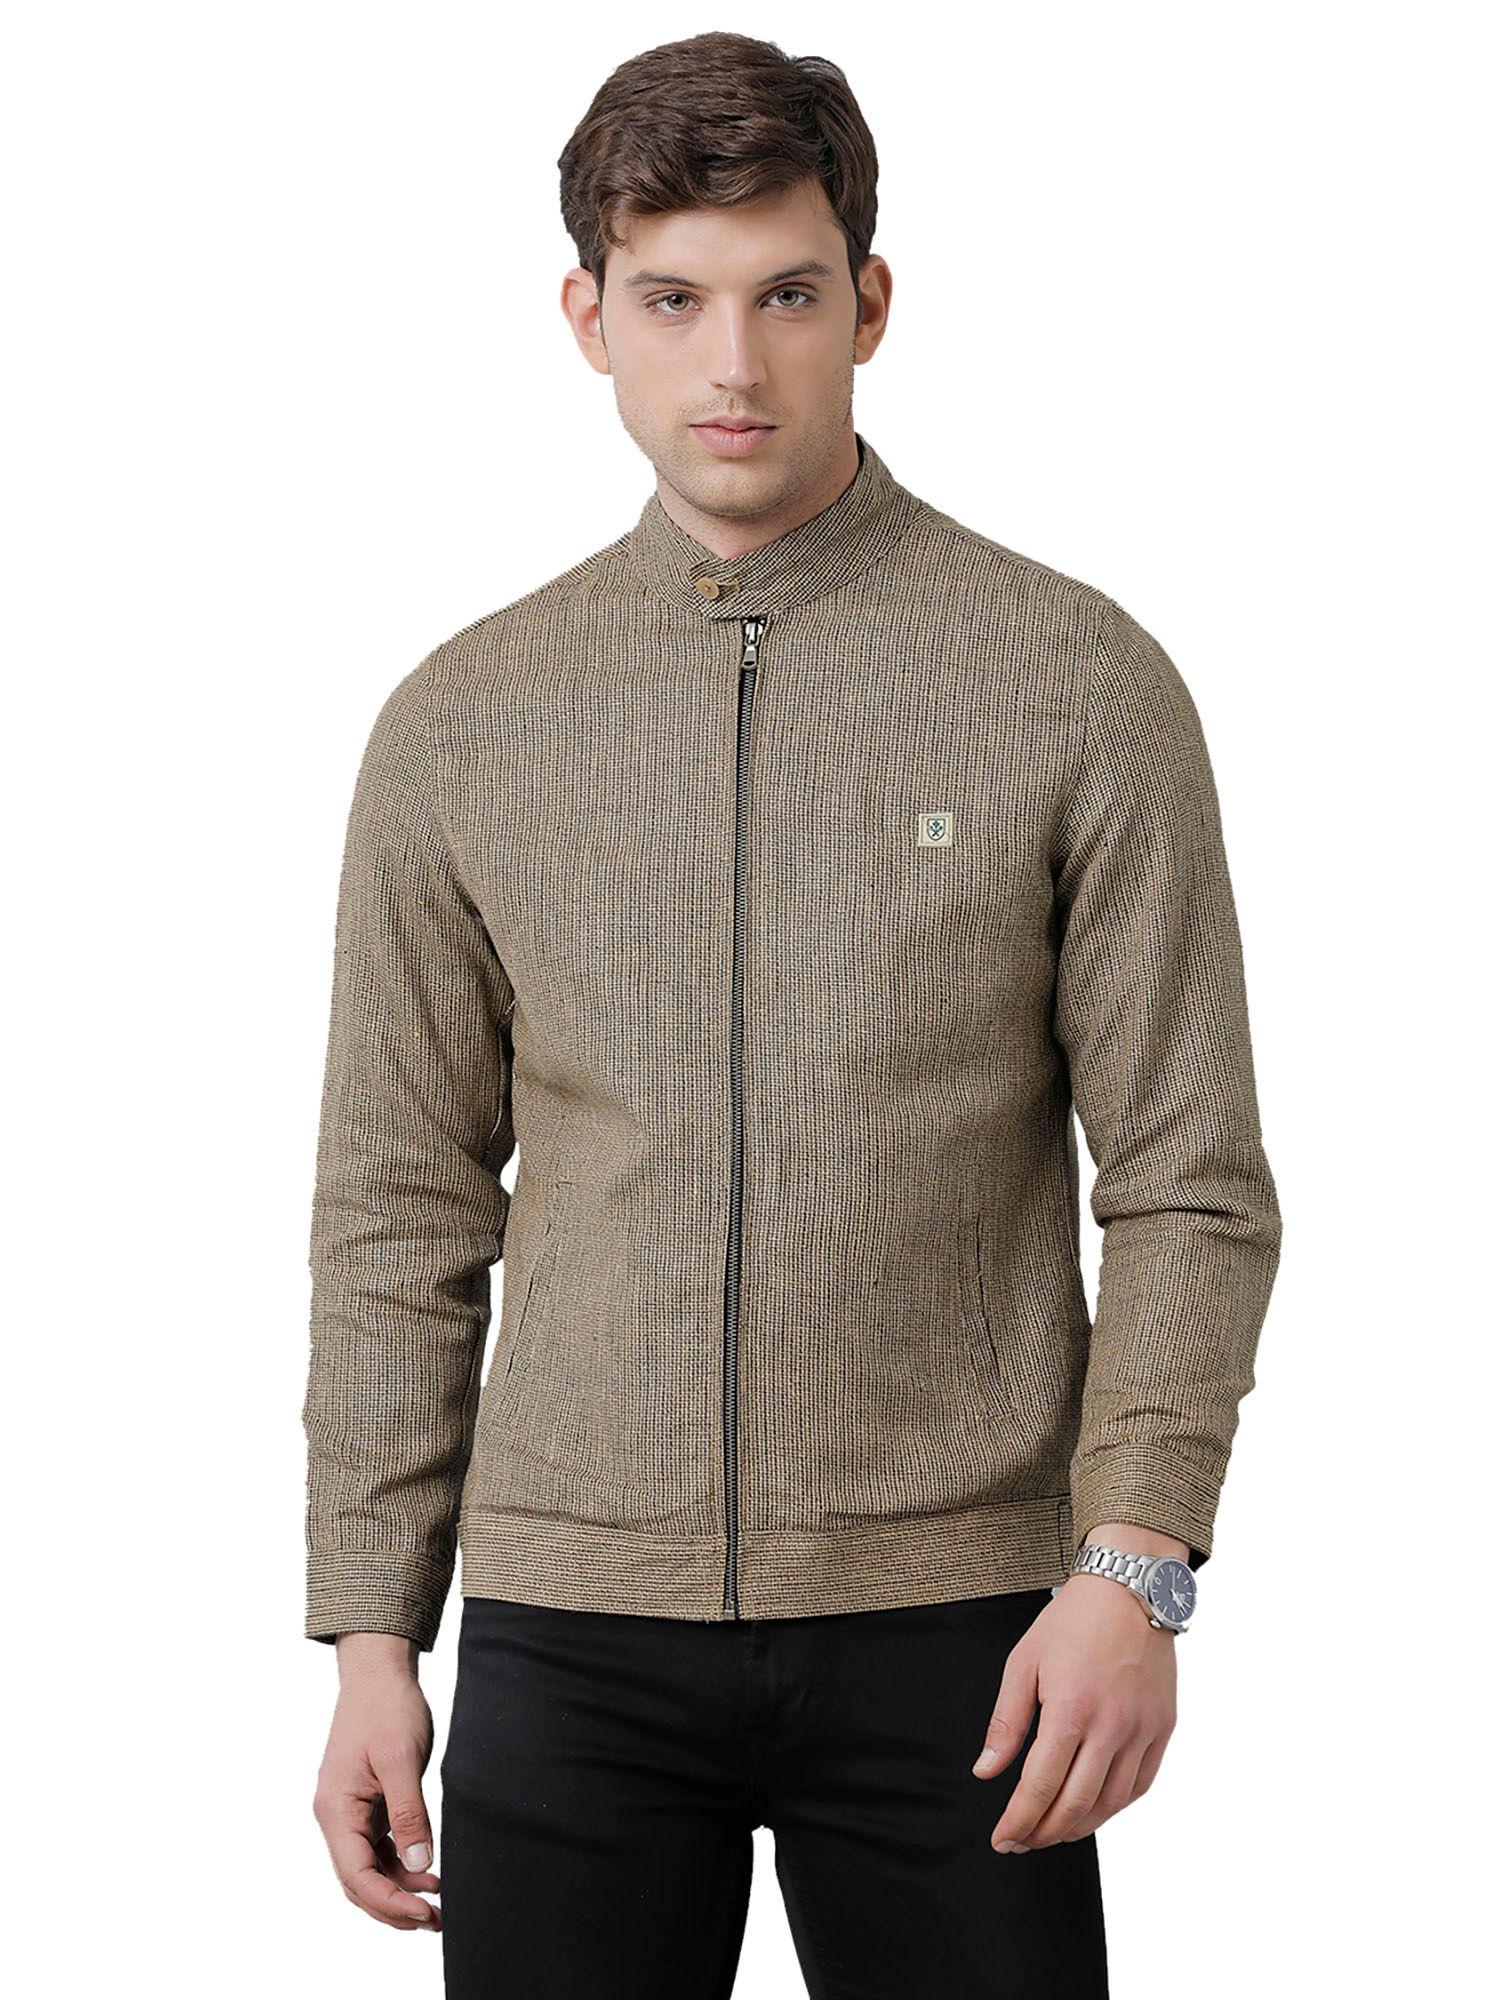 men's linen natural / brown solid casual jacket